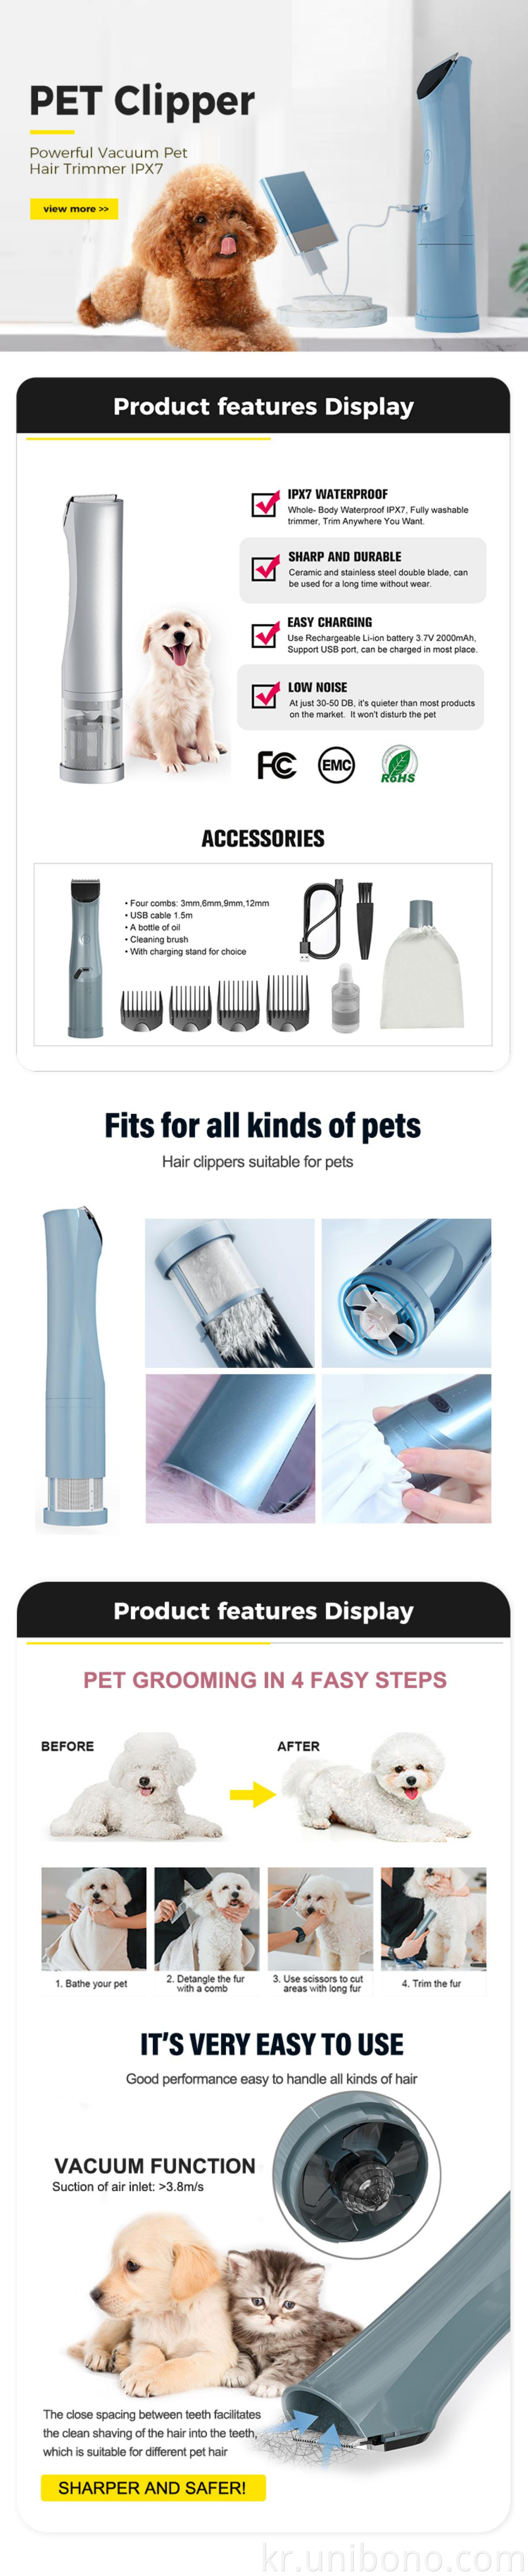 pet grooming clipper vacuum trimmer